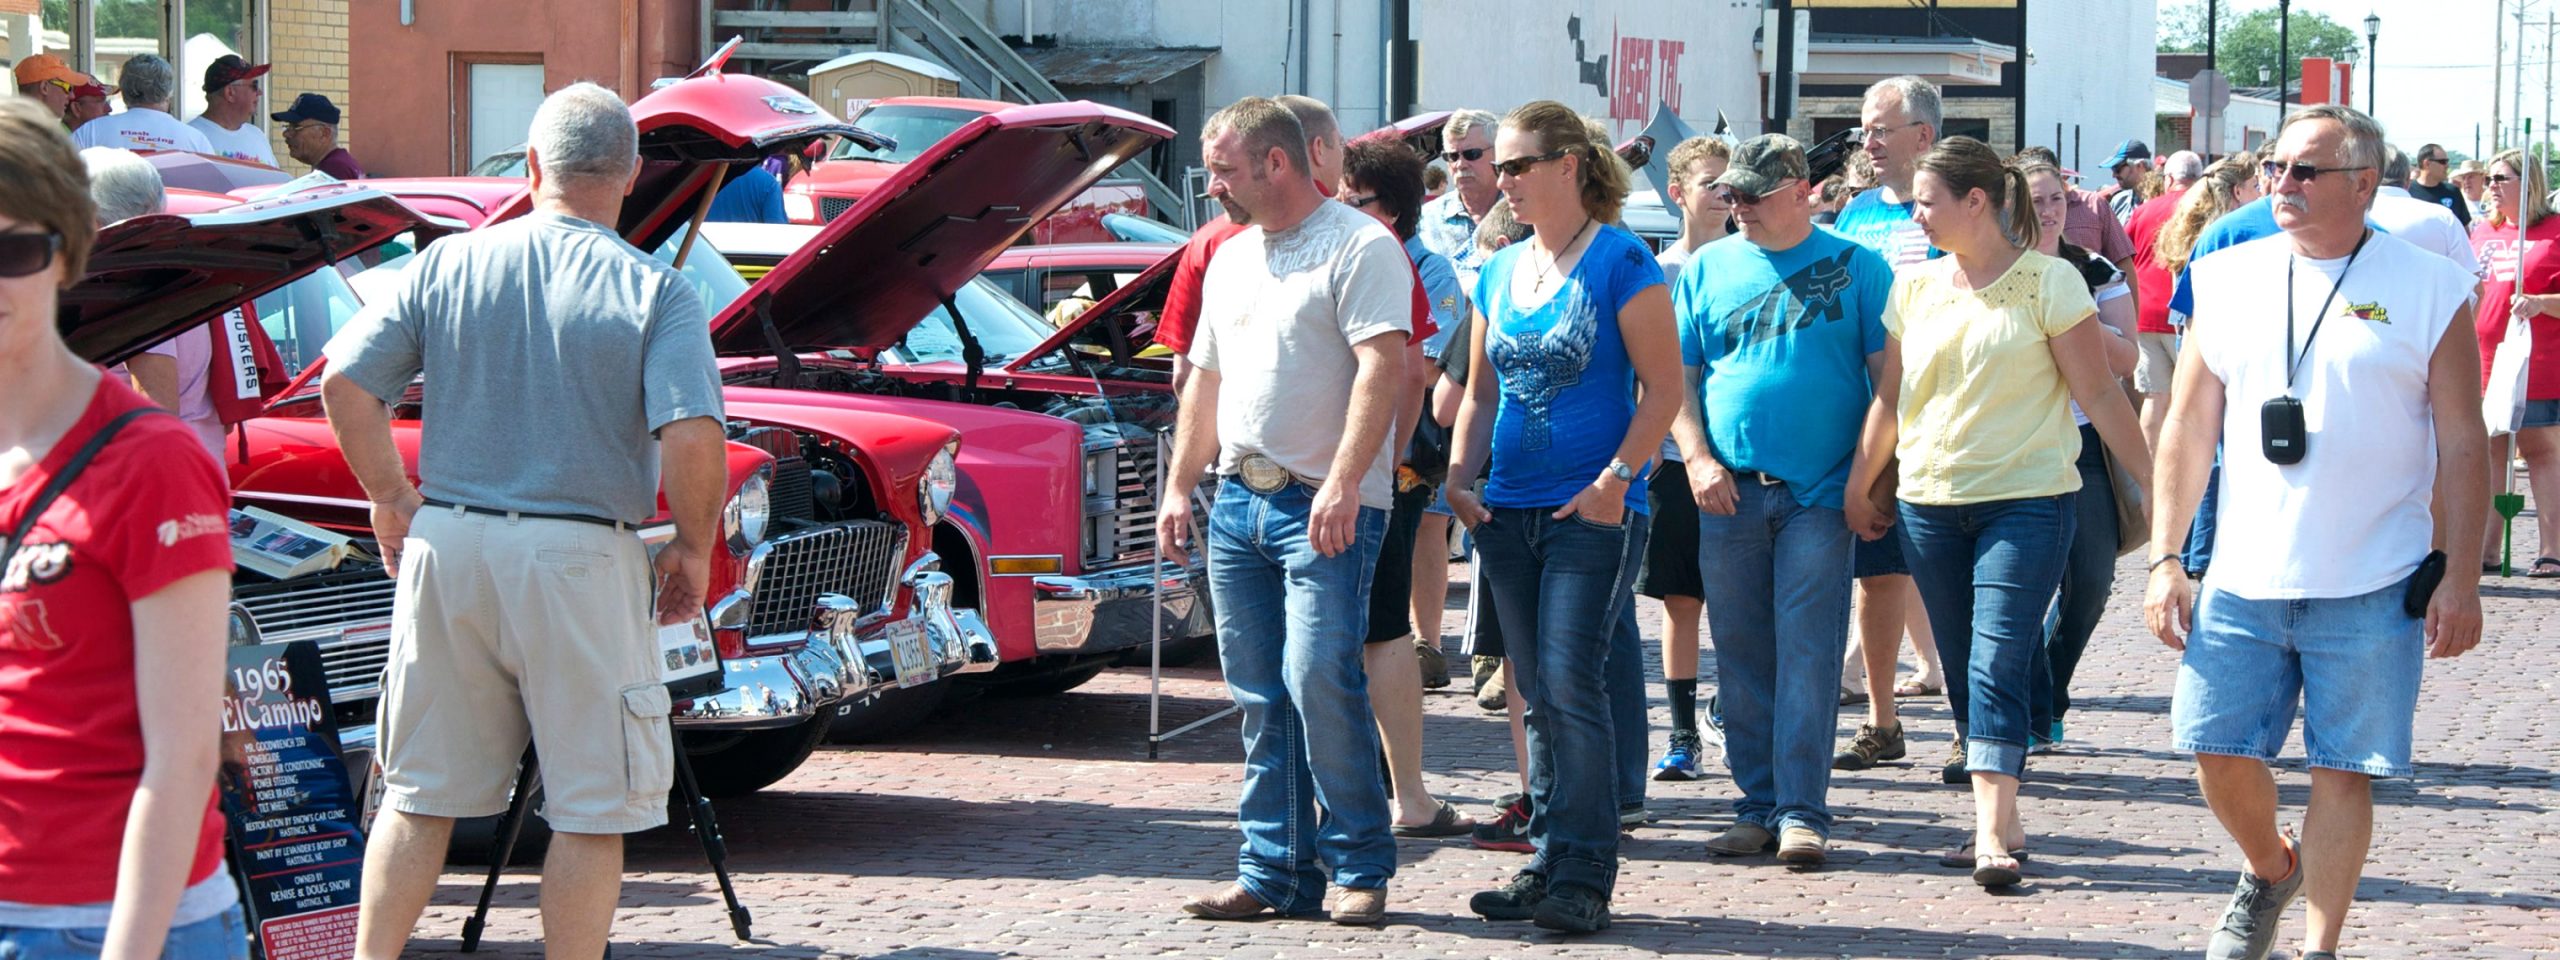 Car Insurance In Seward Ne Dans Car Truck and Motorcycle Show – Fourth Of July In Seward Nebraska